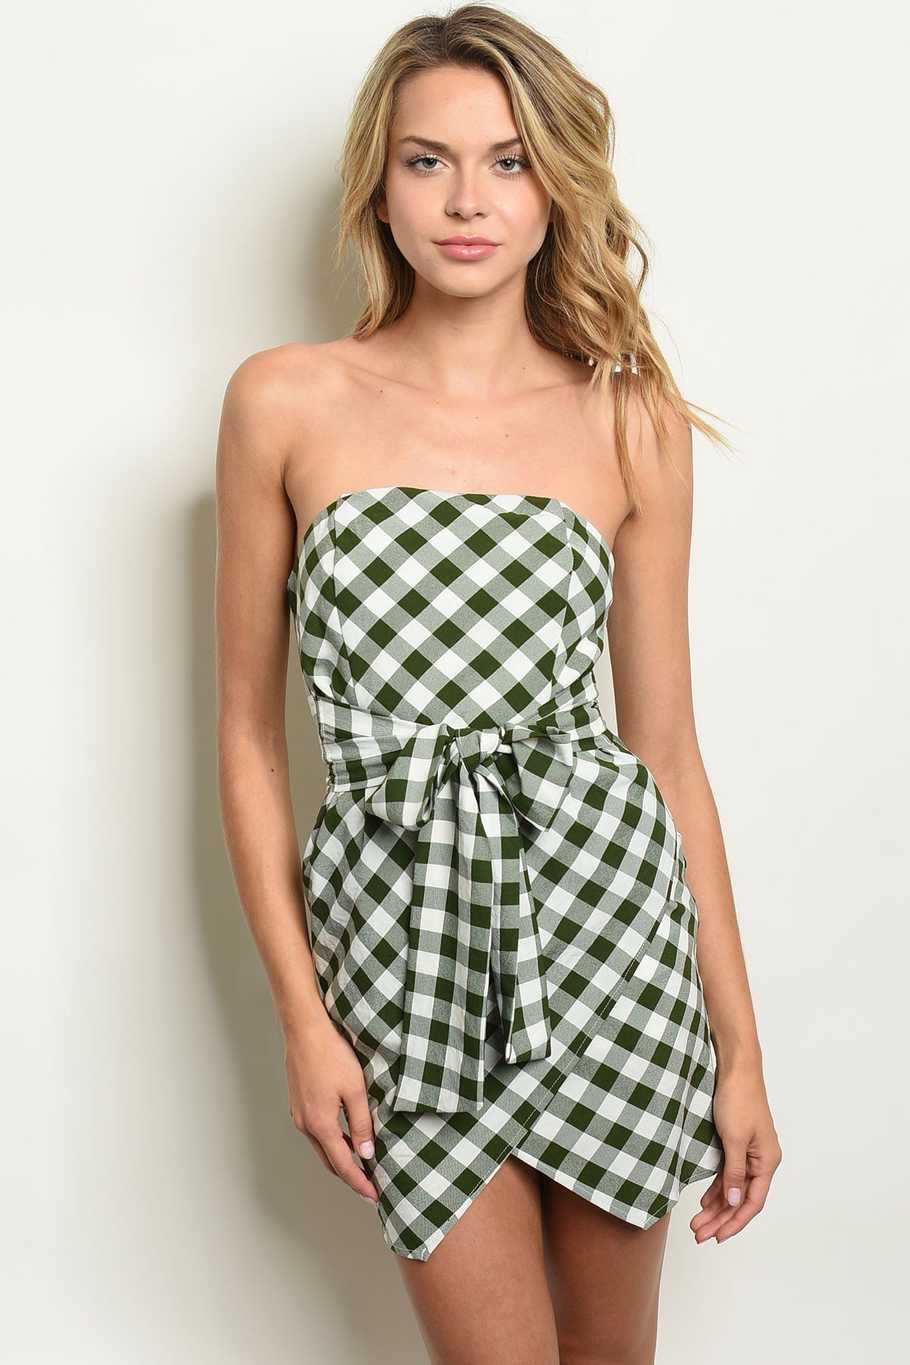 white-green-checkers-dress